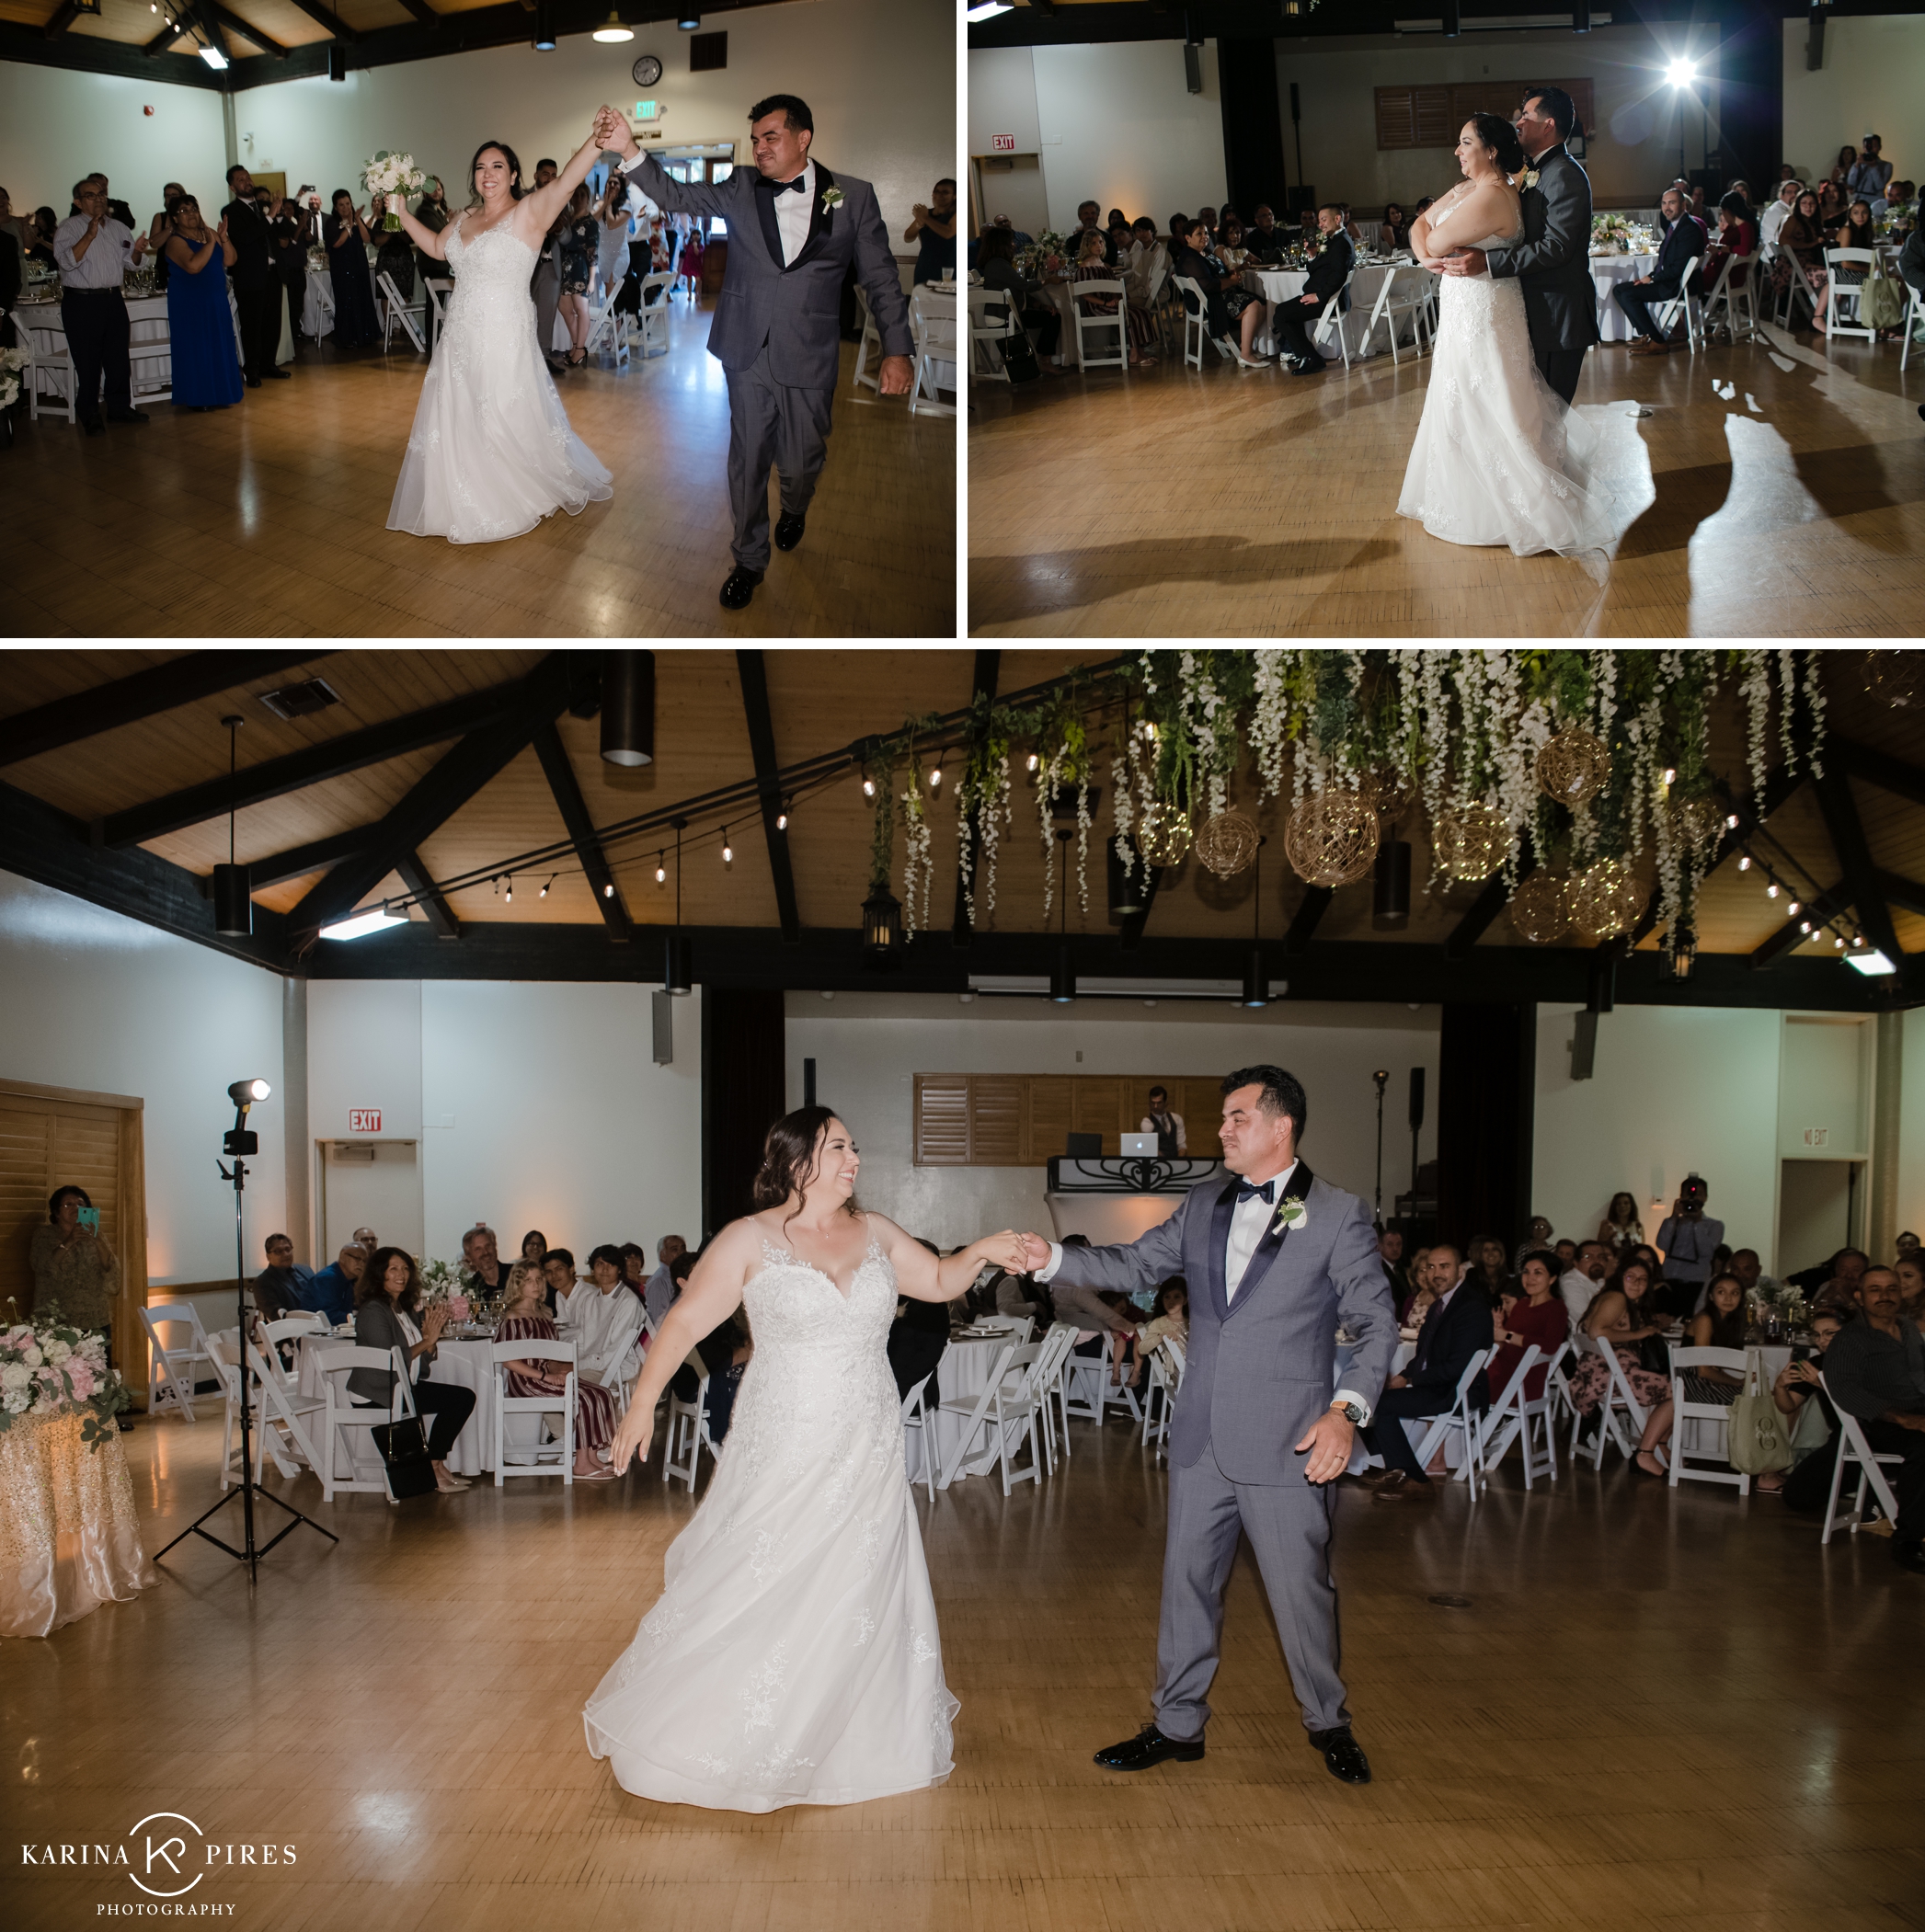 Jennifer and Ronaldo’s wedding reception at the Grace E. Simons Lodge Wedding